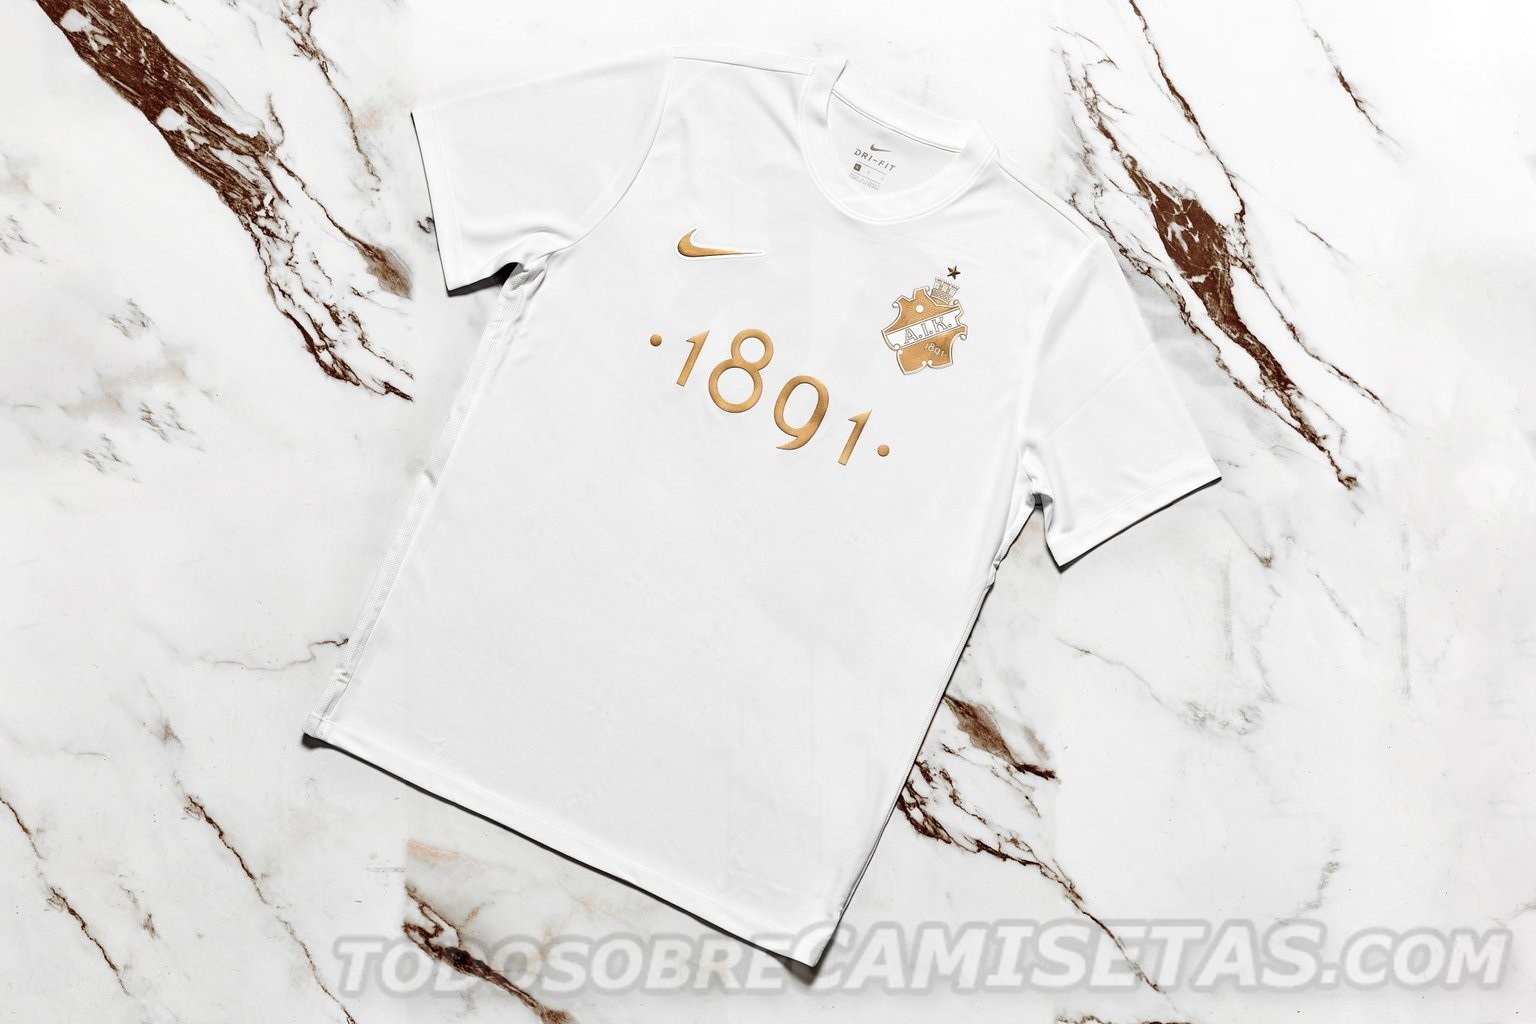 AIK Stockholm Nike White Edition Kit 2019